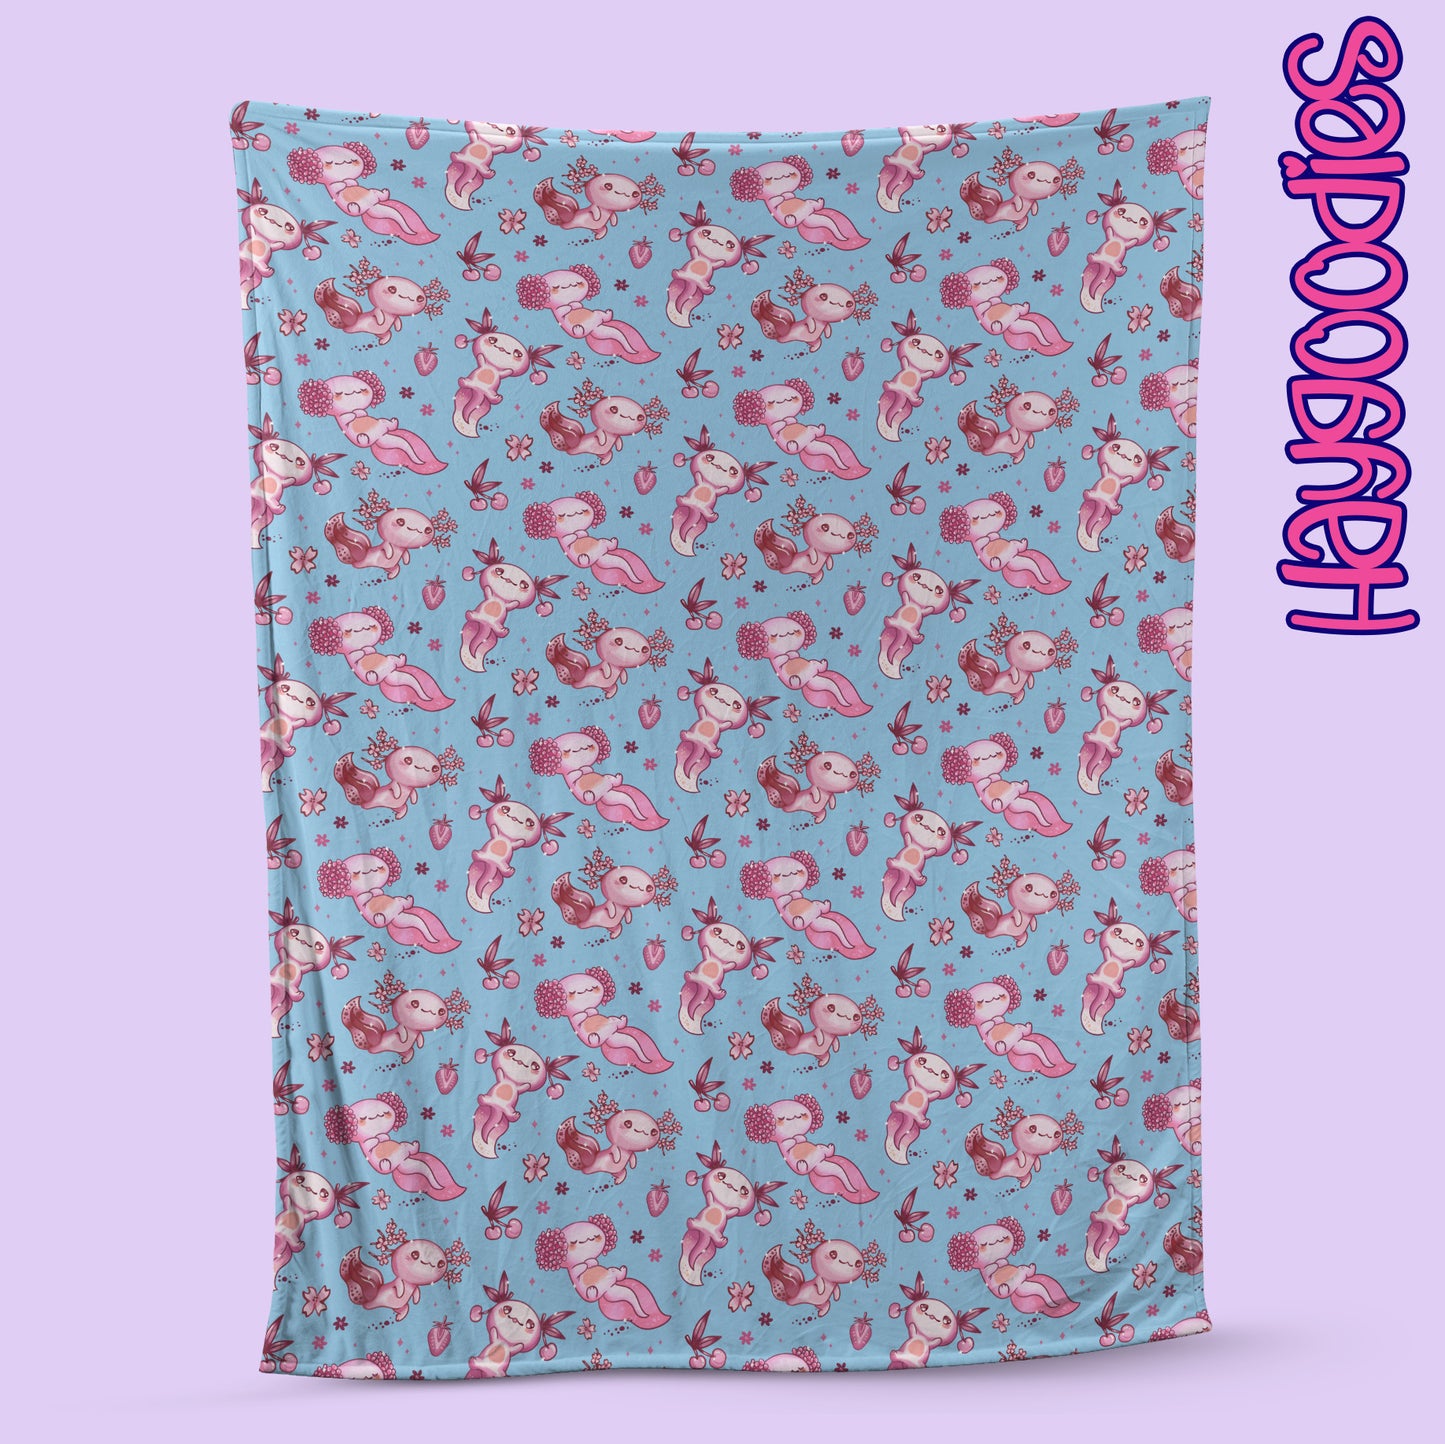 Cute Axolotls Pattern Super Soft Micro Fleece Blanket-Pink or Blue-Various Sizes